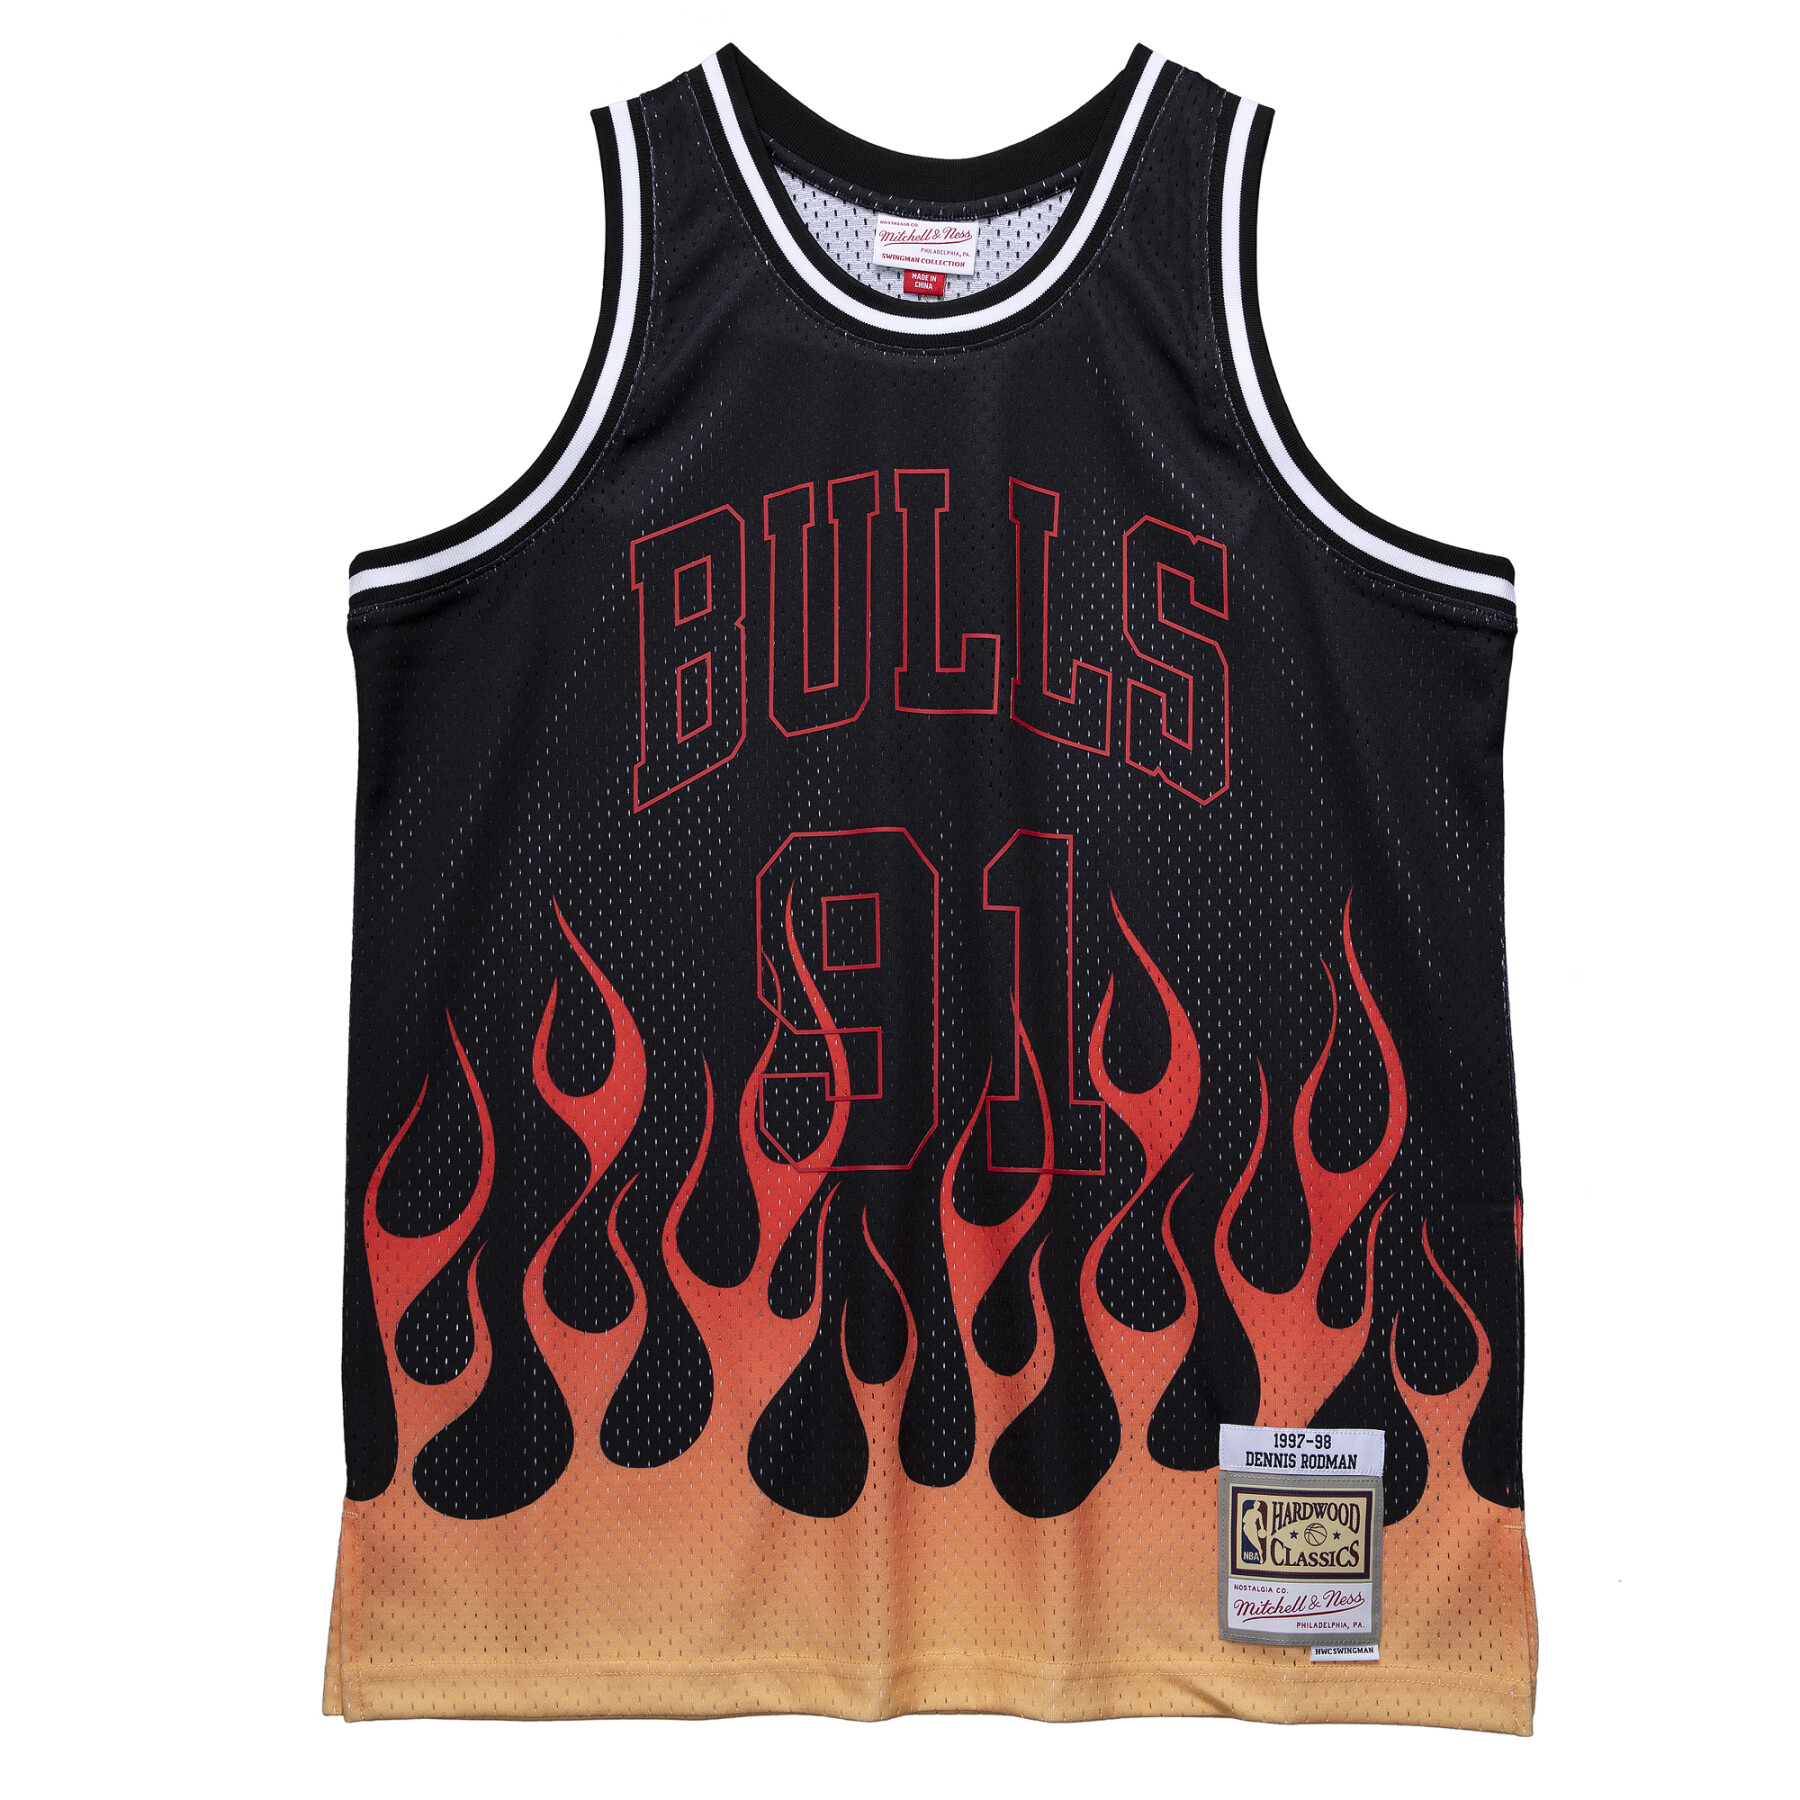 Jersey Chicago Bulls Dennis Rodman 1997/98